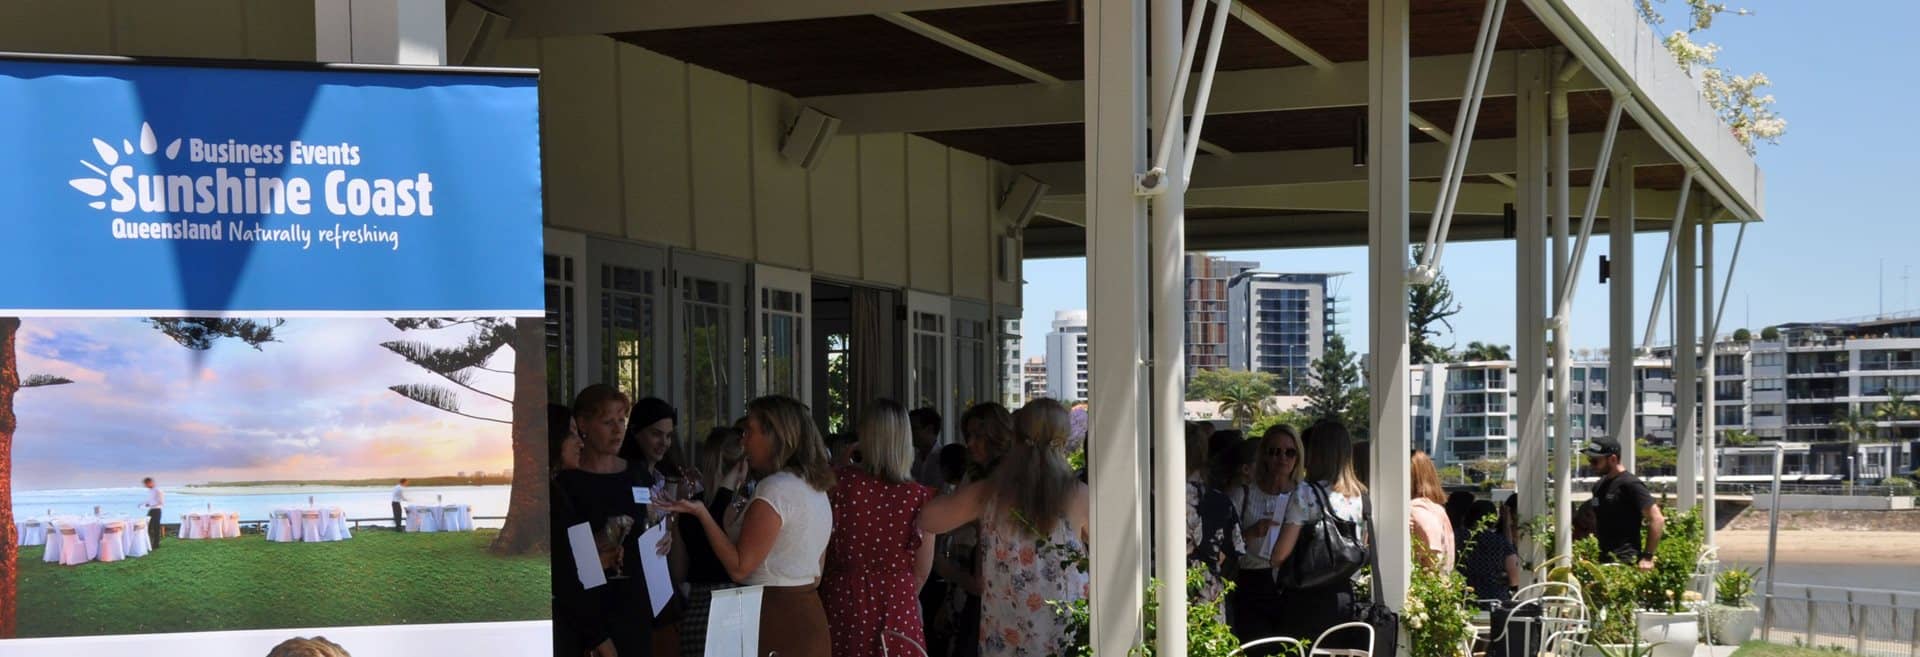 Business Events Sunshine Coast holds annual Sunshine Soiree in Brisbane